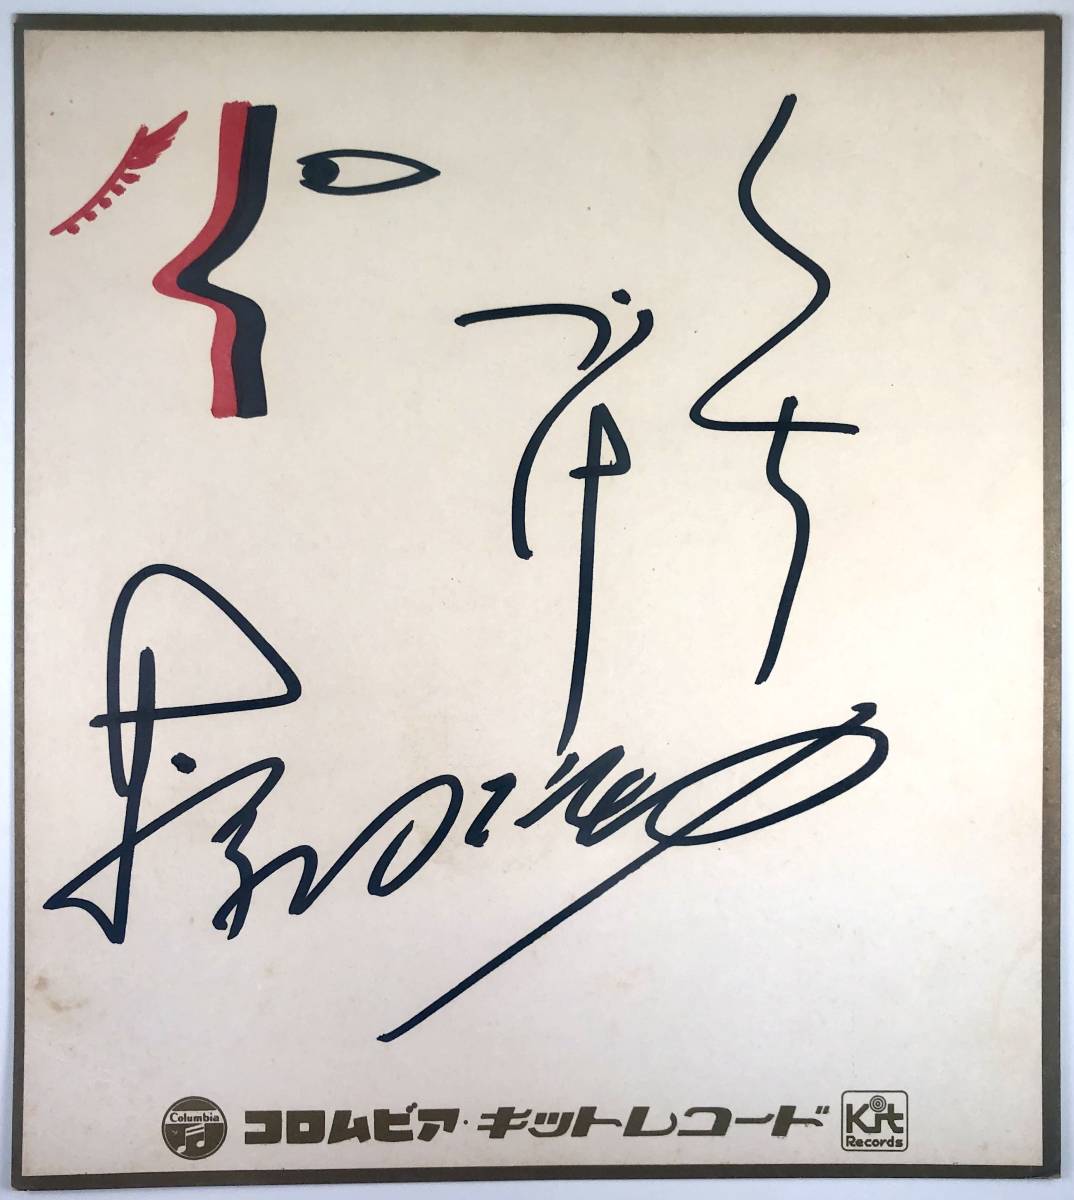 Masayoshi Tsuruoka handsigniertes farbiges Papier (Masayoshi Tsuruoka/Mood Kayo/Columbia Kit Record farbiges Papier/1972/Retro/JUNK), Musik, Souvenir, Erinnerungsstücke, Zeichen